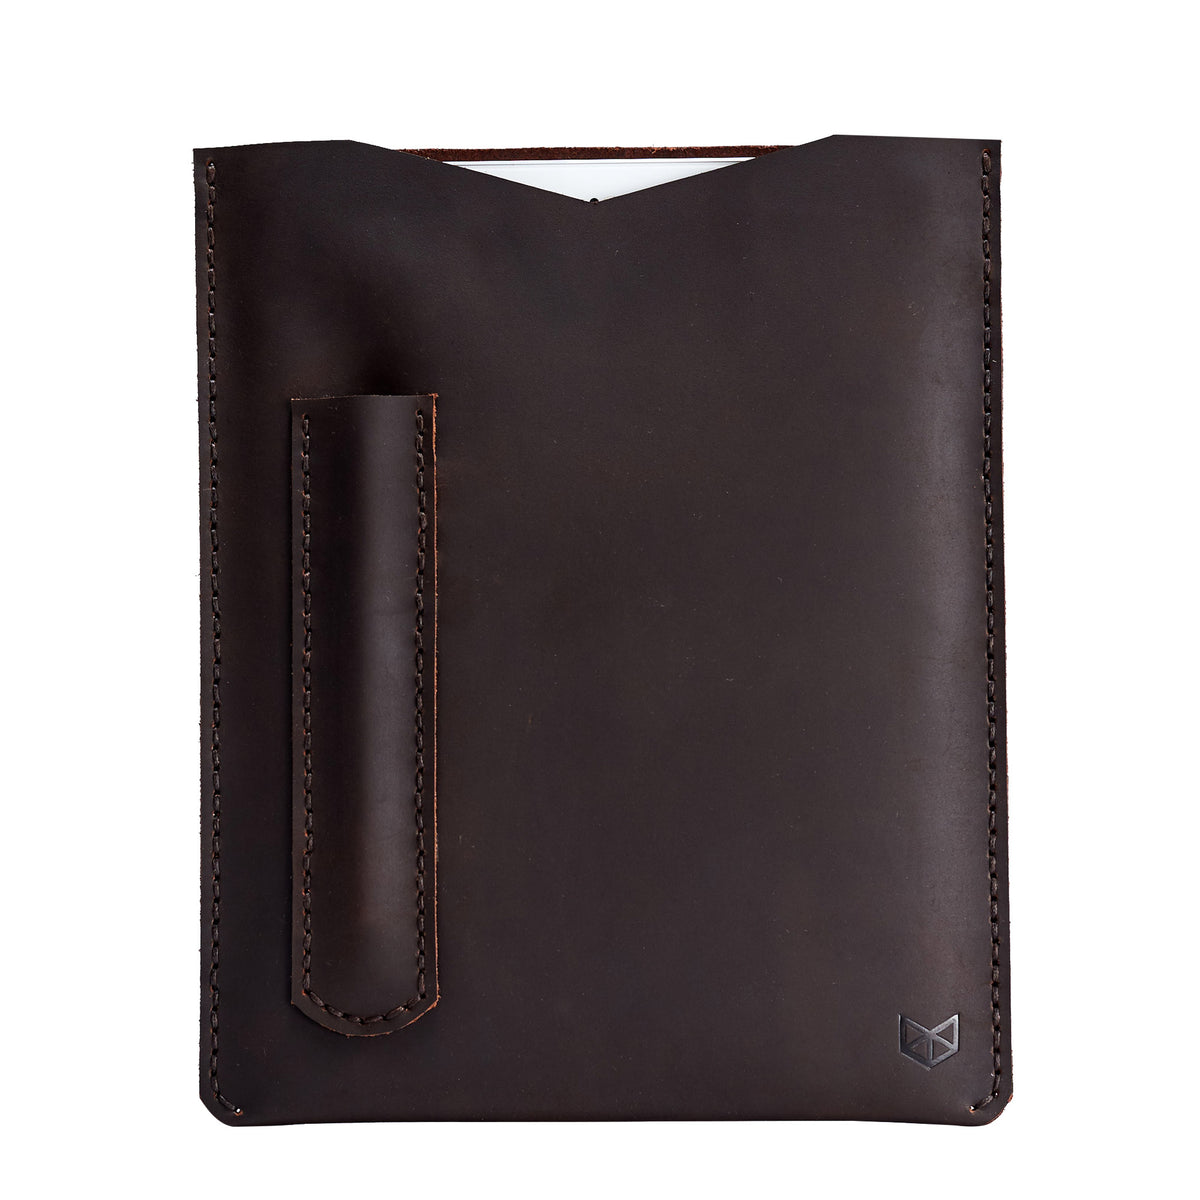 Capra Leather iPad pro leather sleeve. Marron leather sleeve for iPad pro 10.5 inch 12.9 inch. Mens gifts